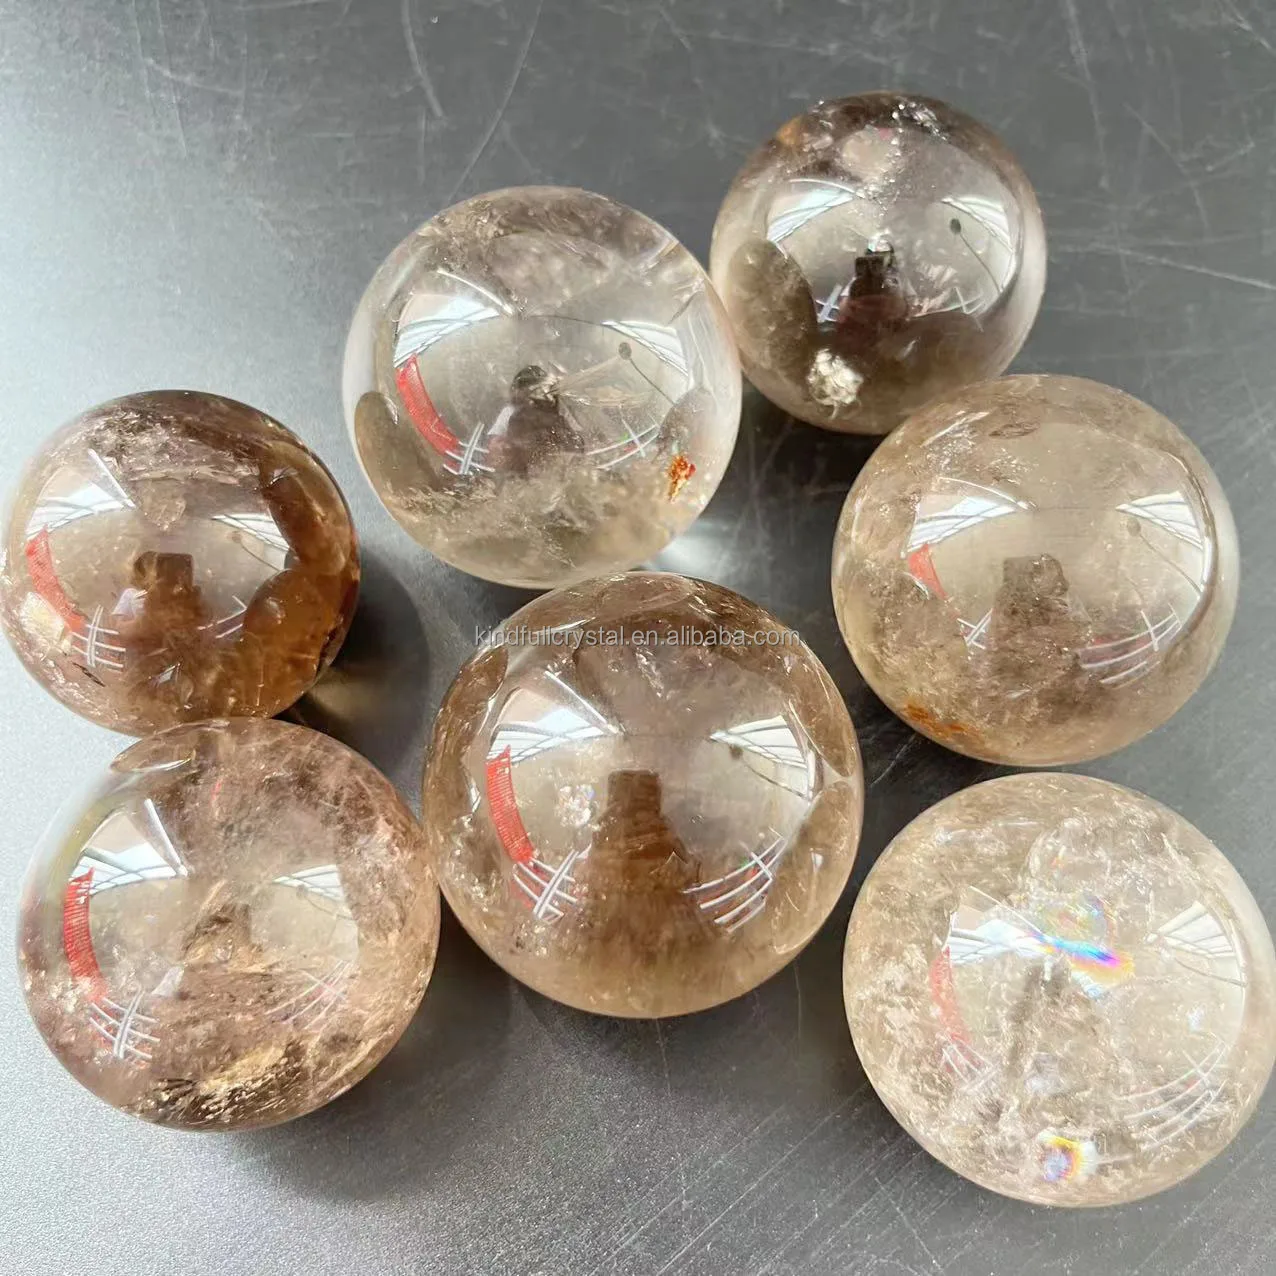 Crystals Healing Stones Wholesale Smoky Quartz Sphere Minerals Stones Natural Crystal (1600525869896)